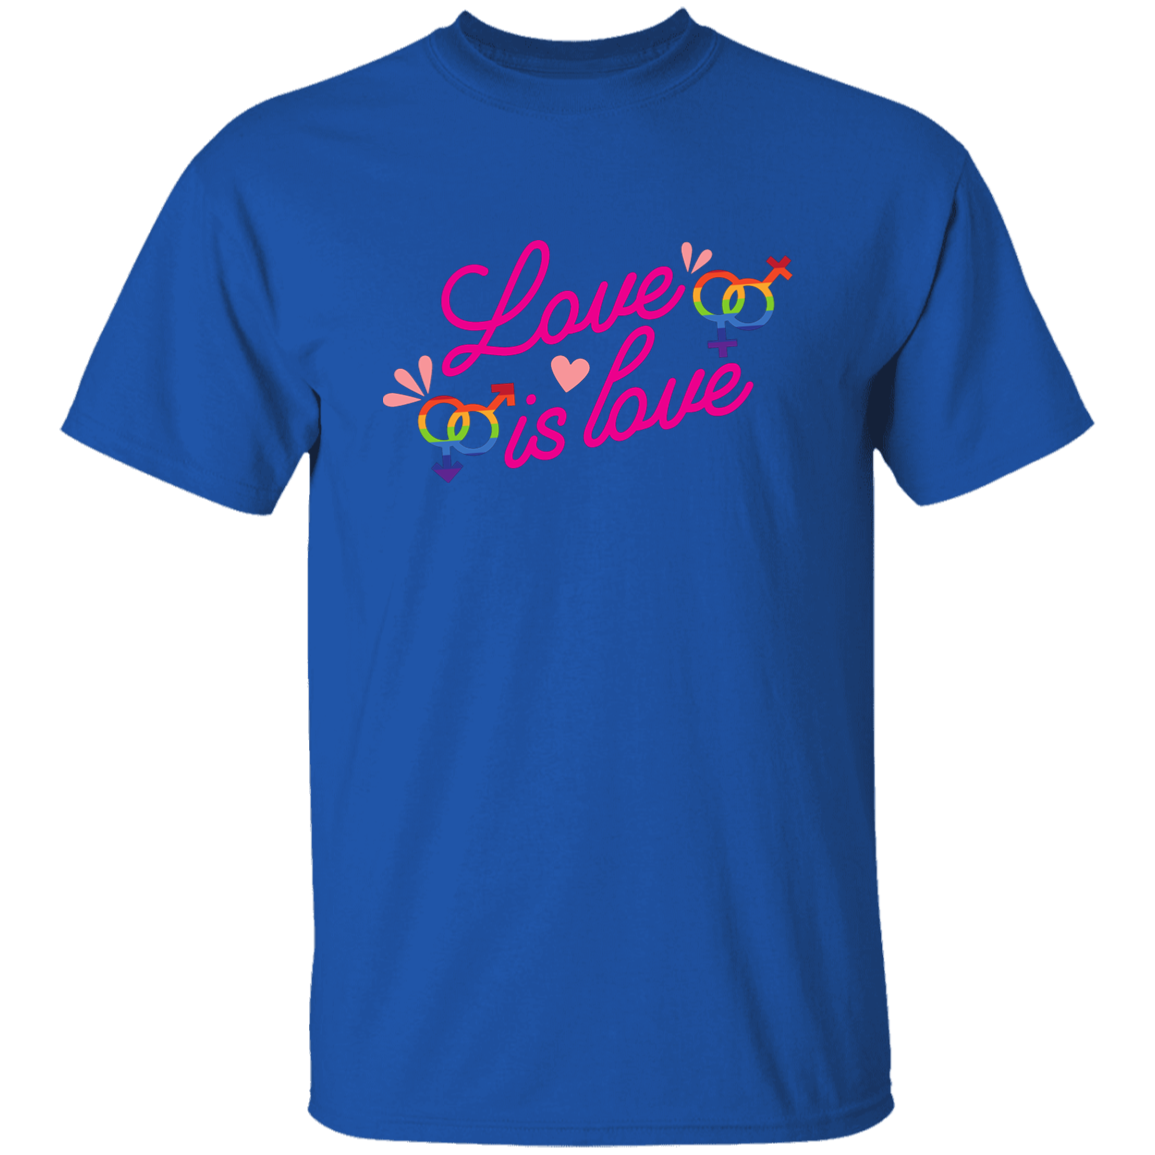 Love is Love Short Sleeve Shirt